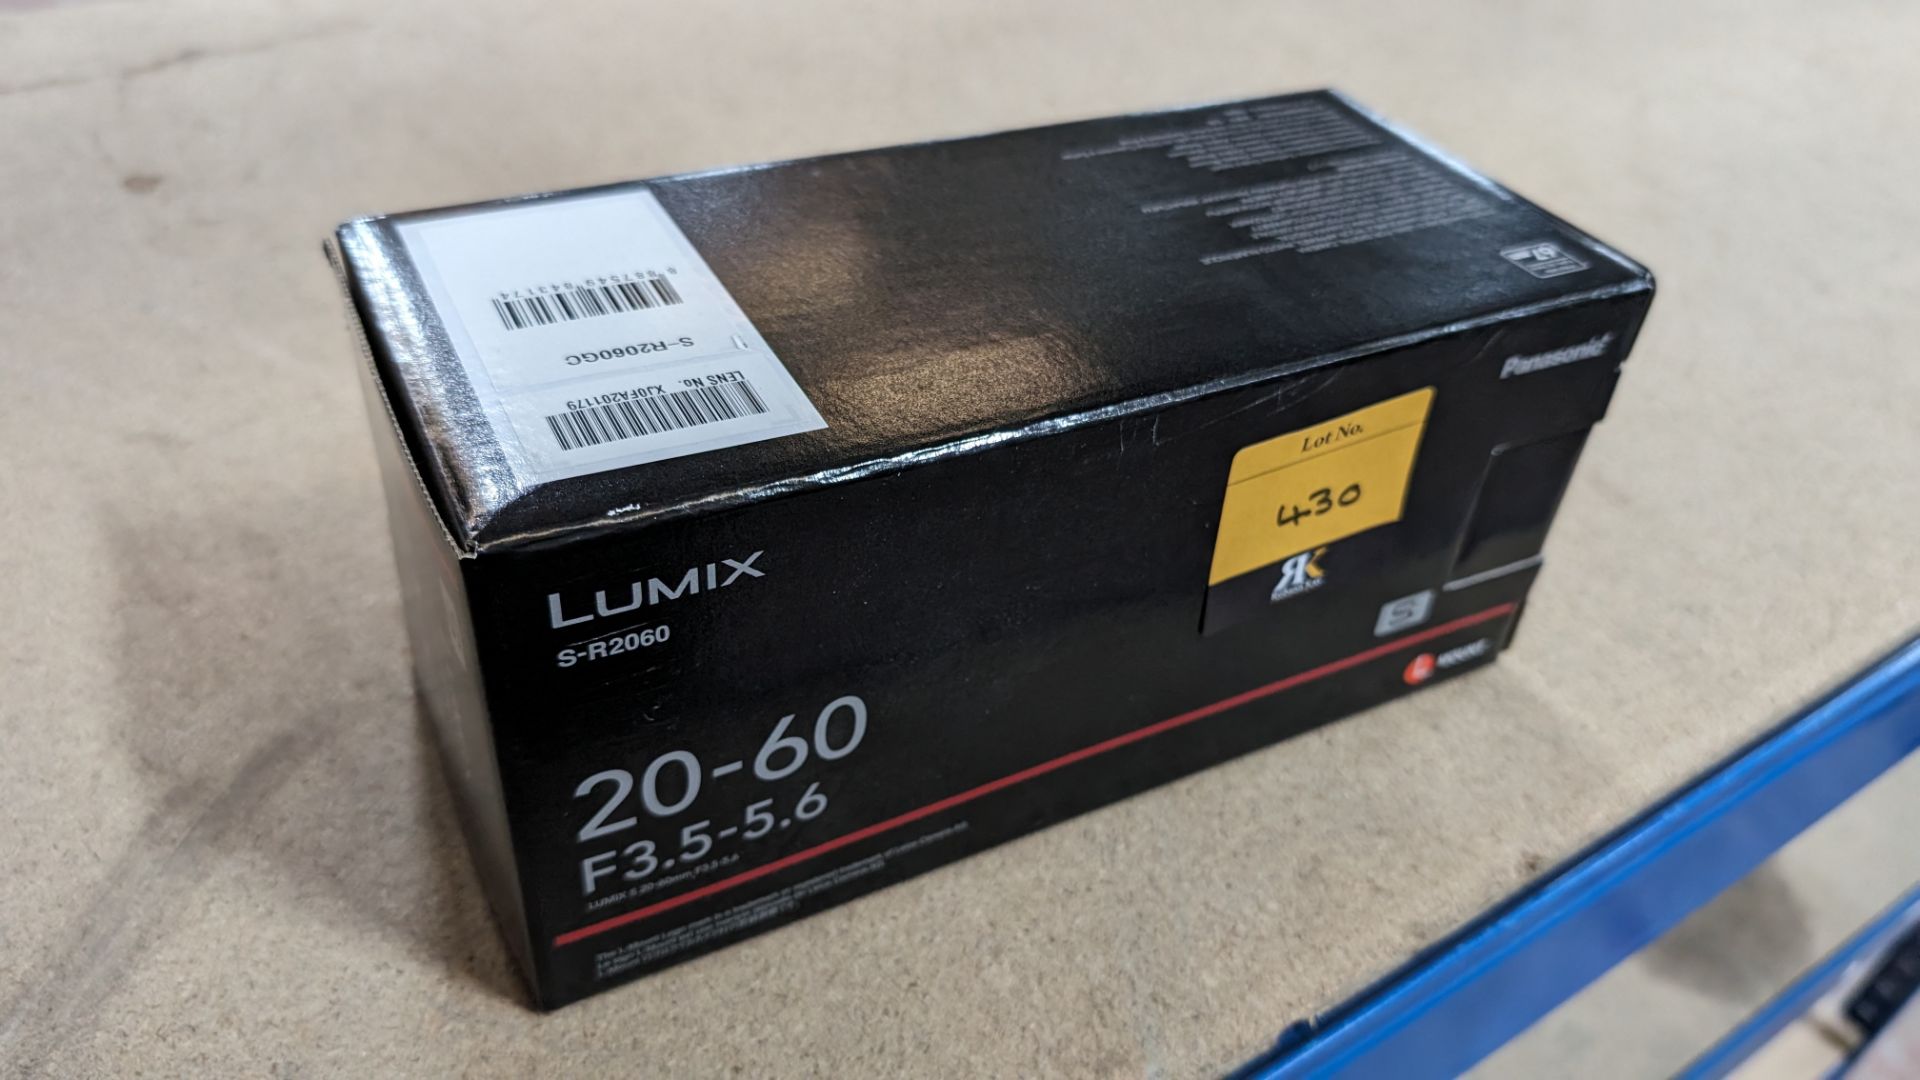 Panasonic Lumix model S-R2060 lens, 20-60mm, f3.5-5.6 - Bild 2 aus 10